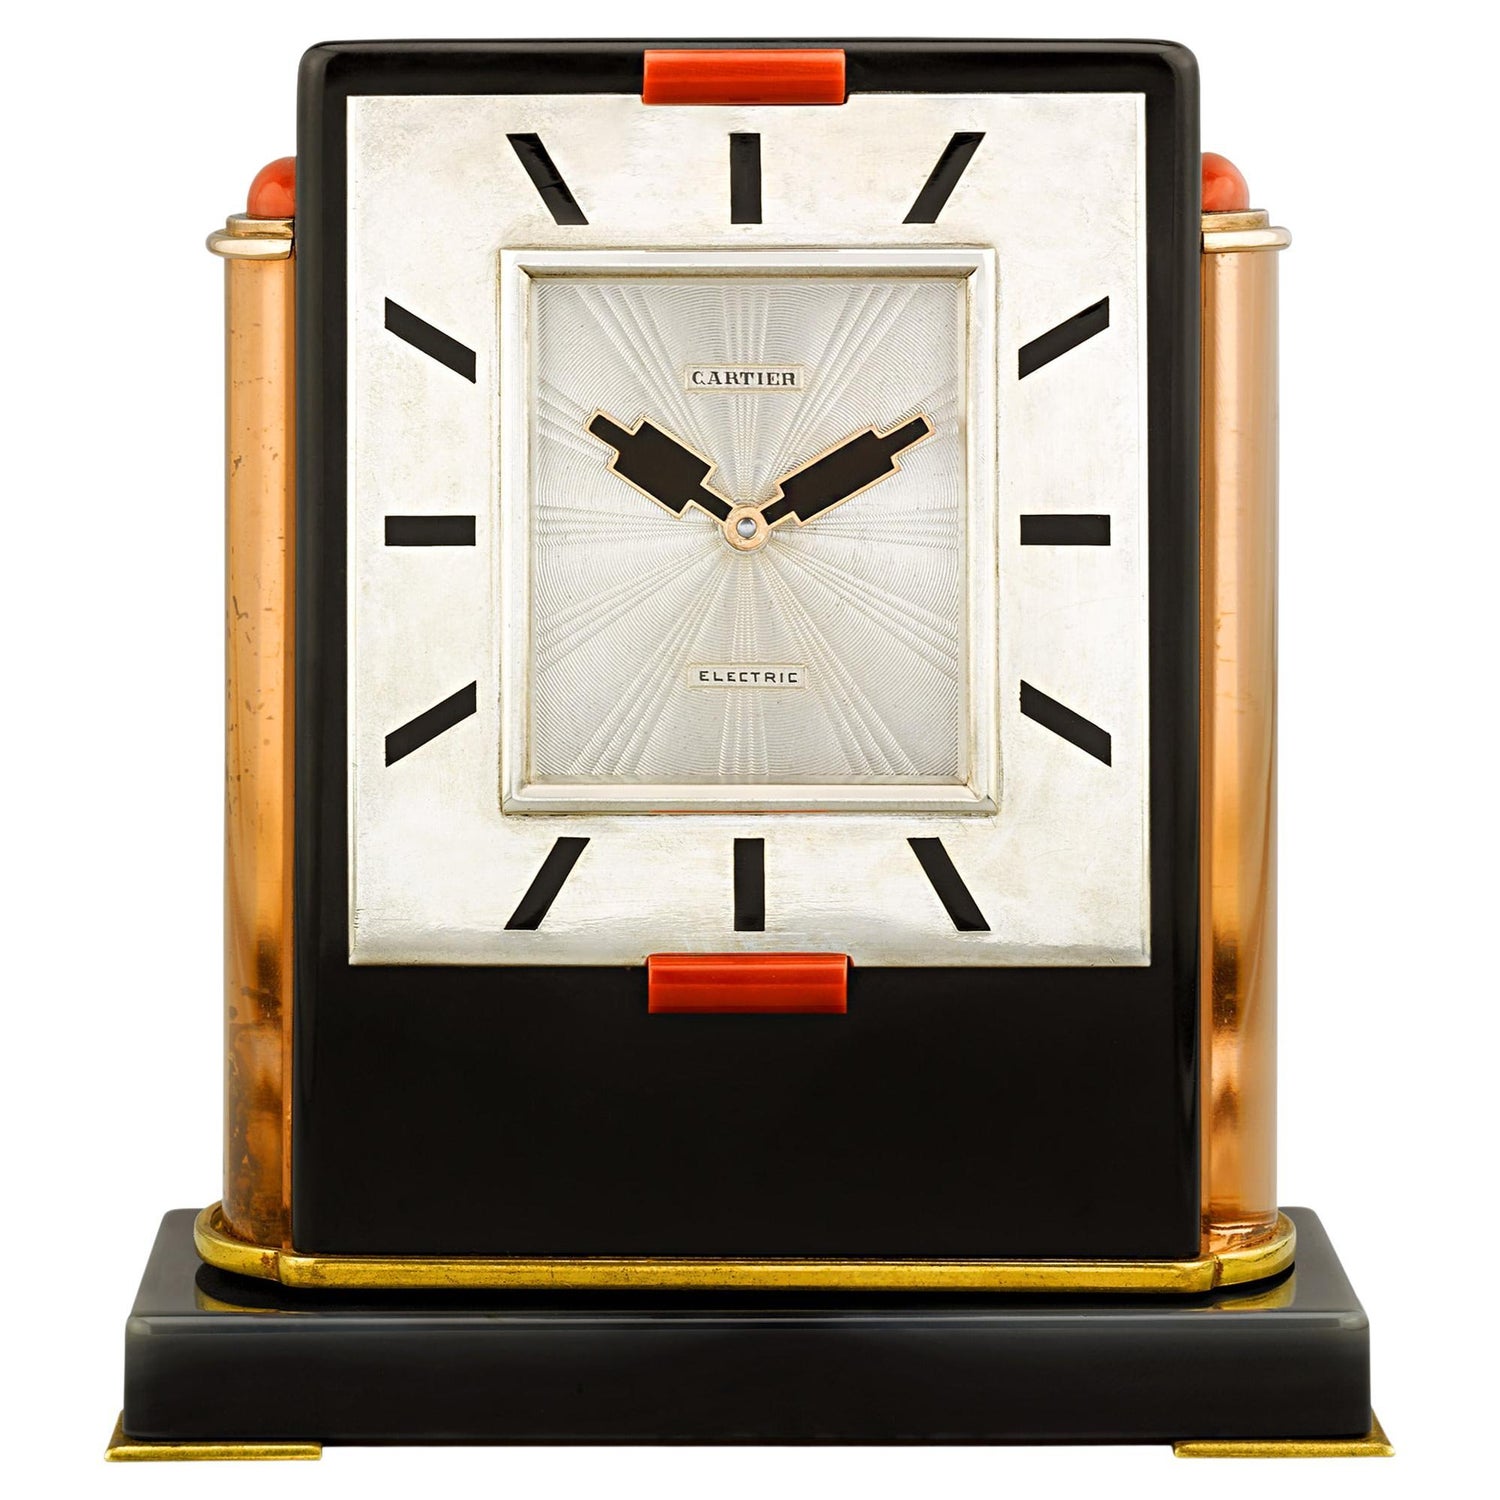 The Golden Clock - OROLOGIO DA PARETE - NUOVI ARRIVI - LA MAISON D'ART